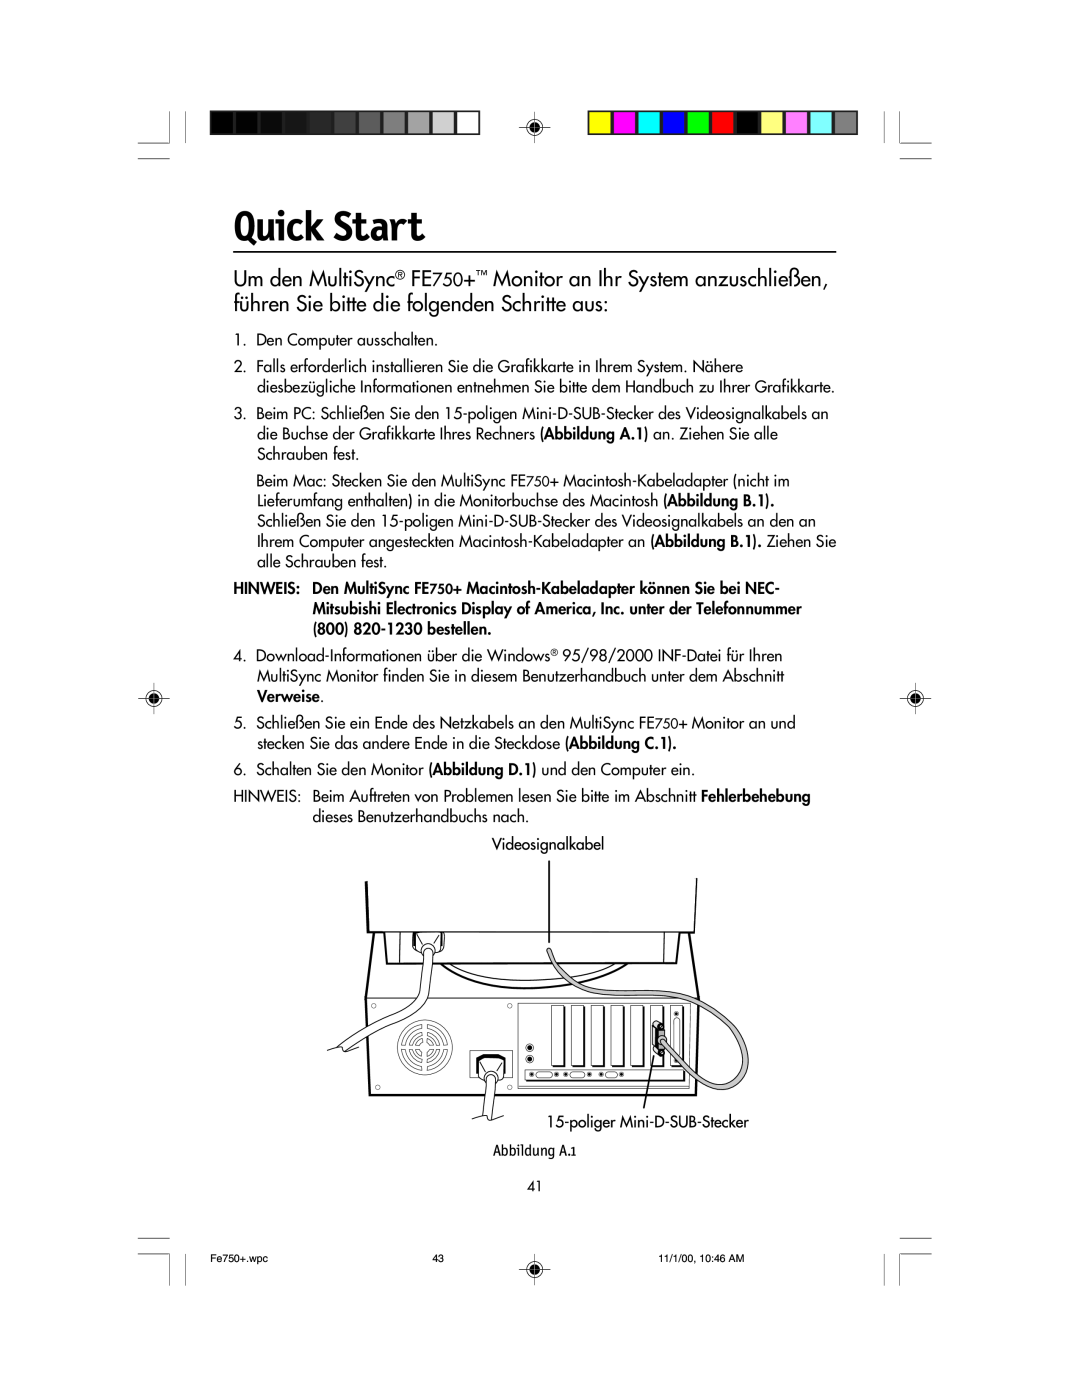 NEC FE750 Plus user manual Quick Start, Abbildung A.1 